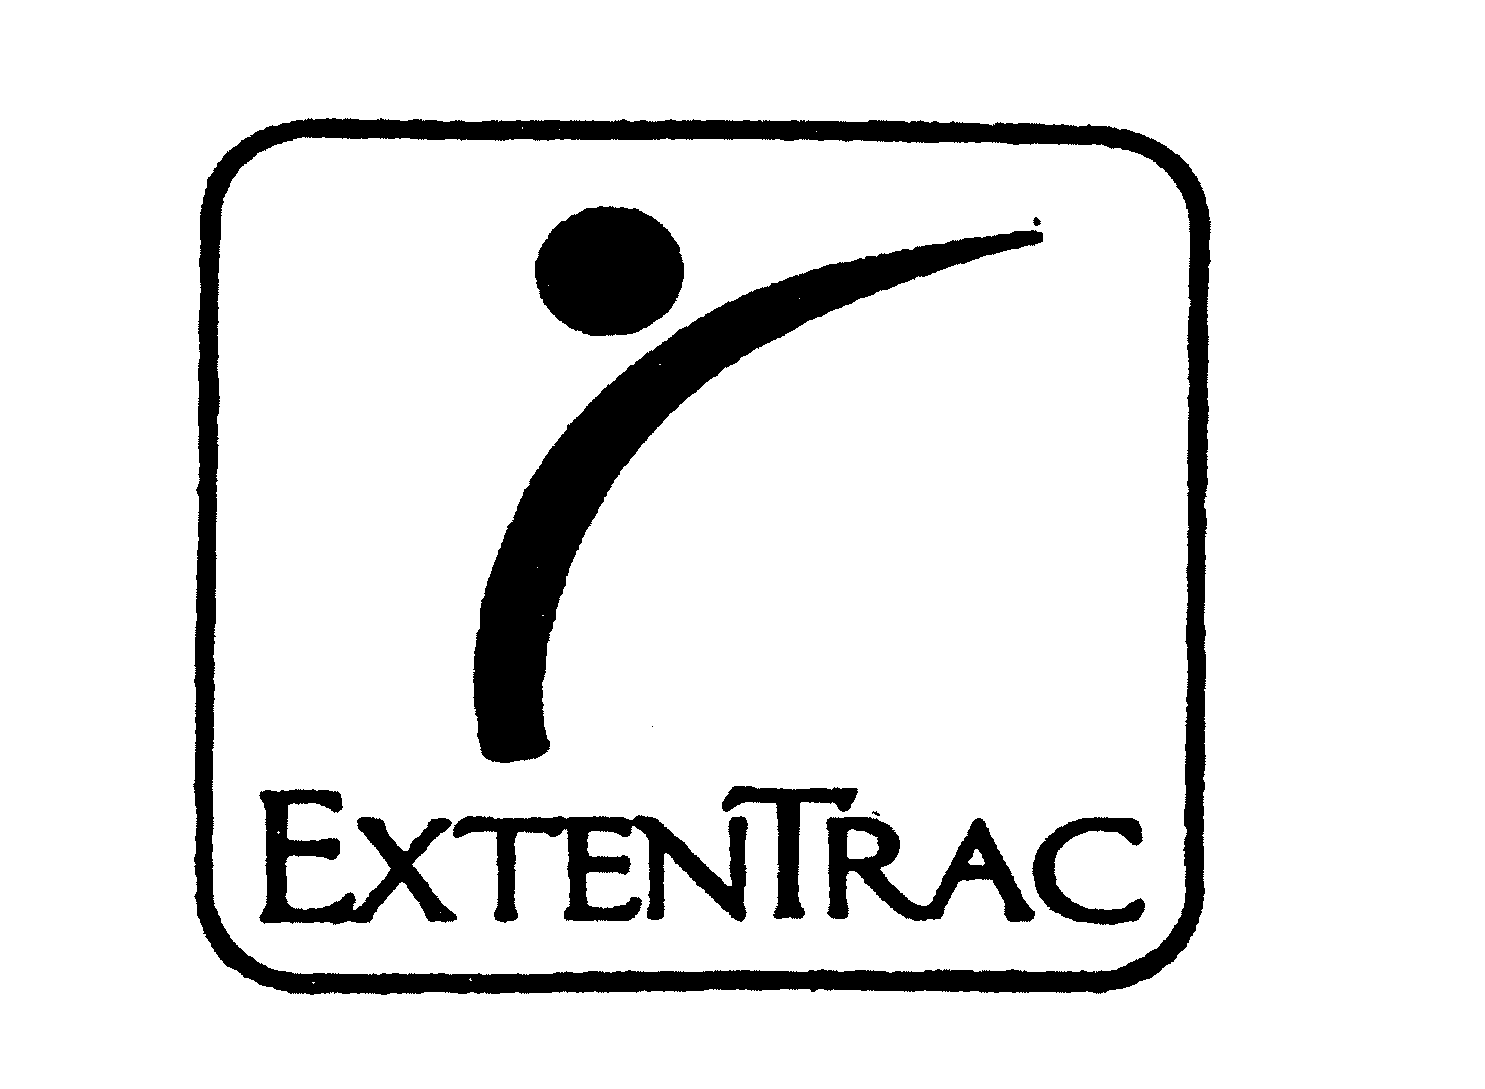  EXTENTRAC